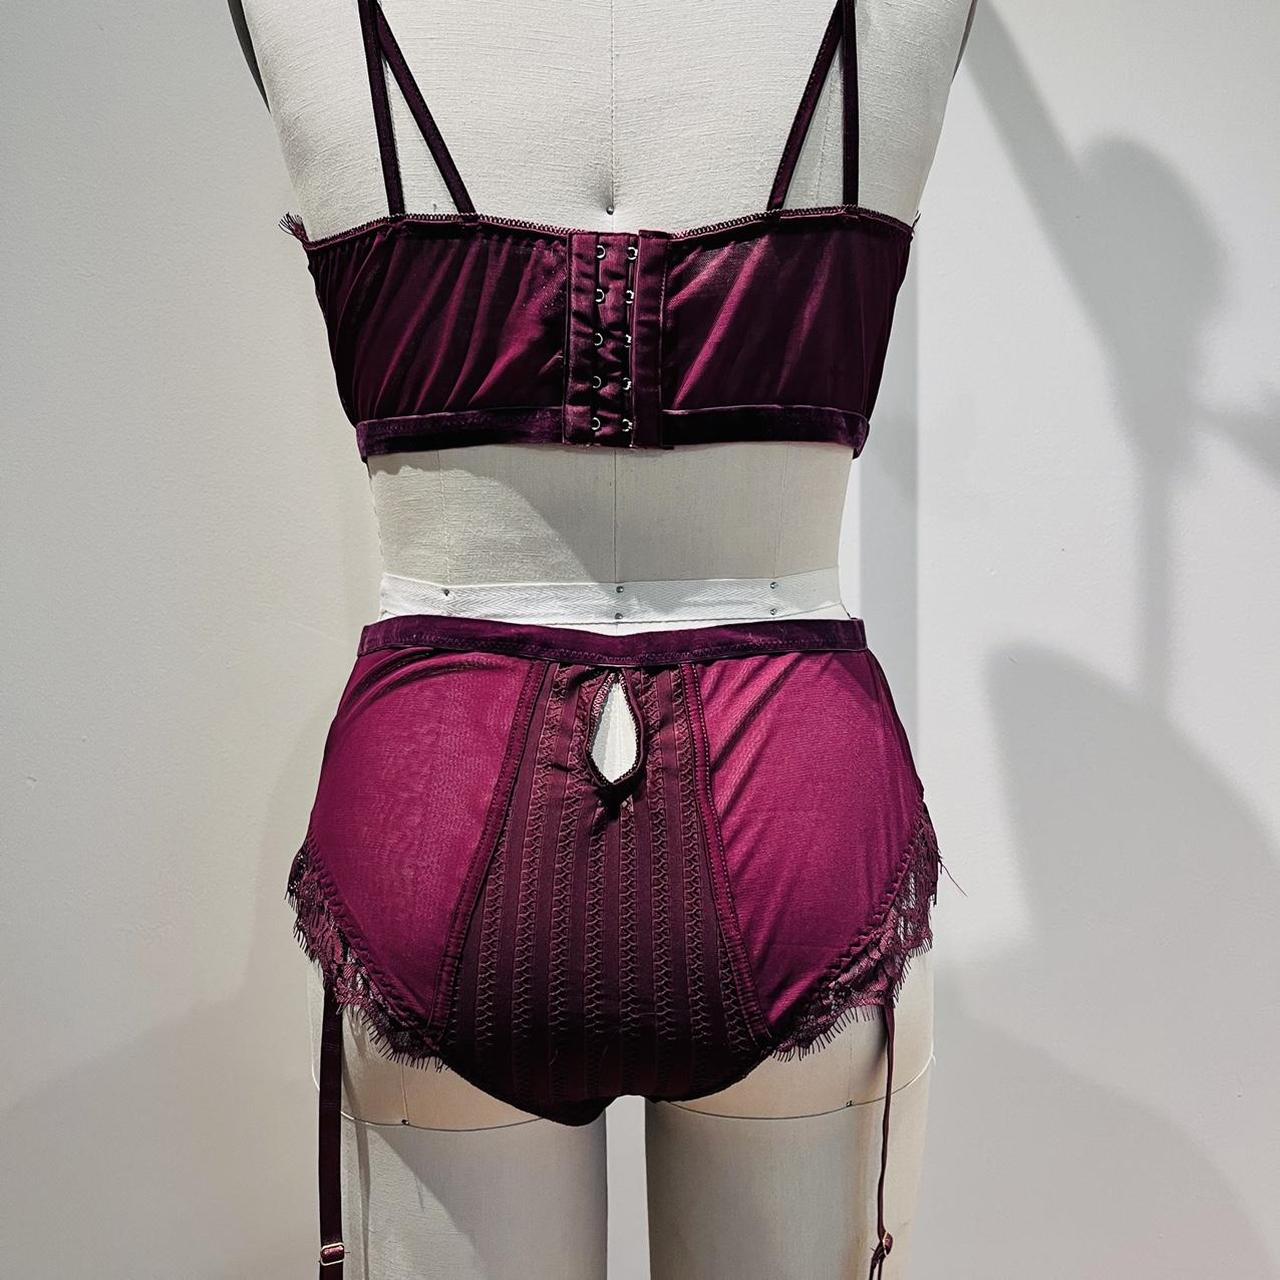 Product Image 3 - Burgundy Vintage style lingerie set